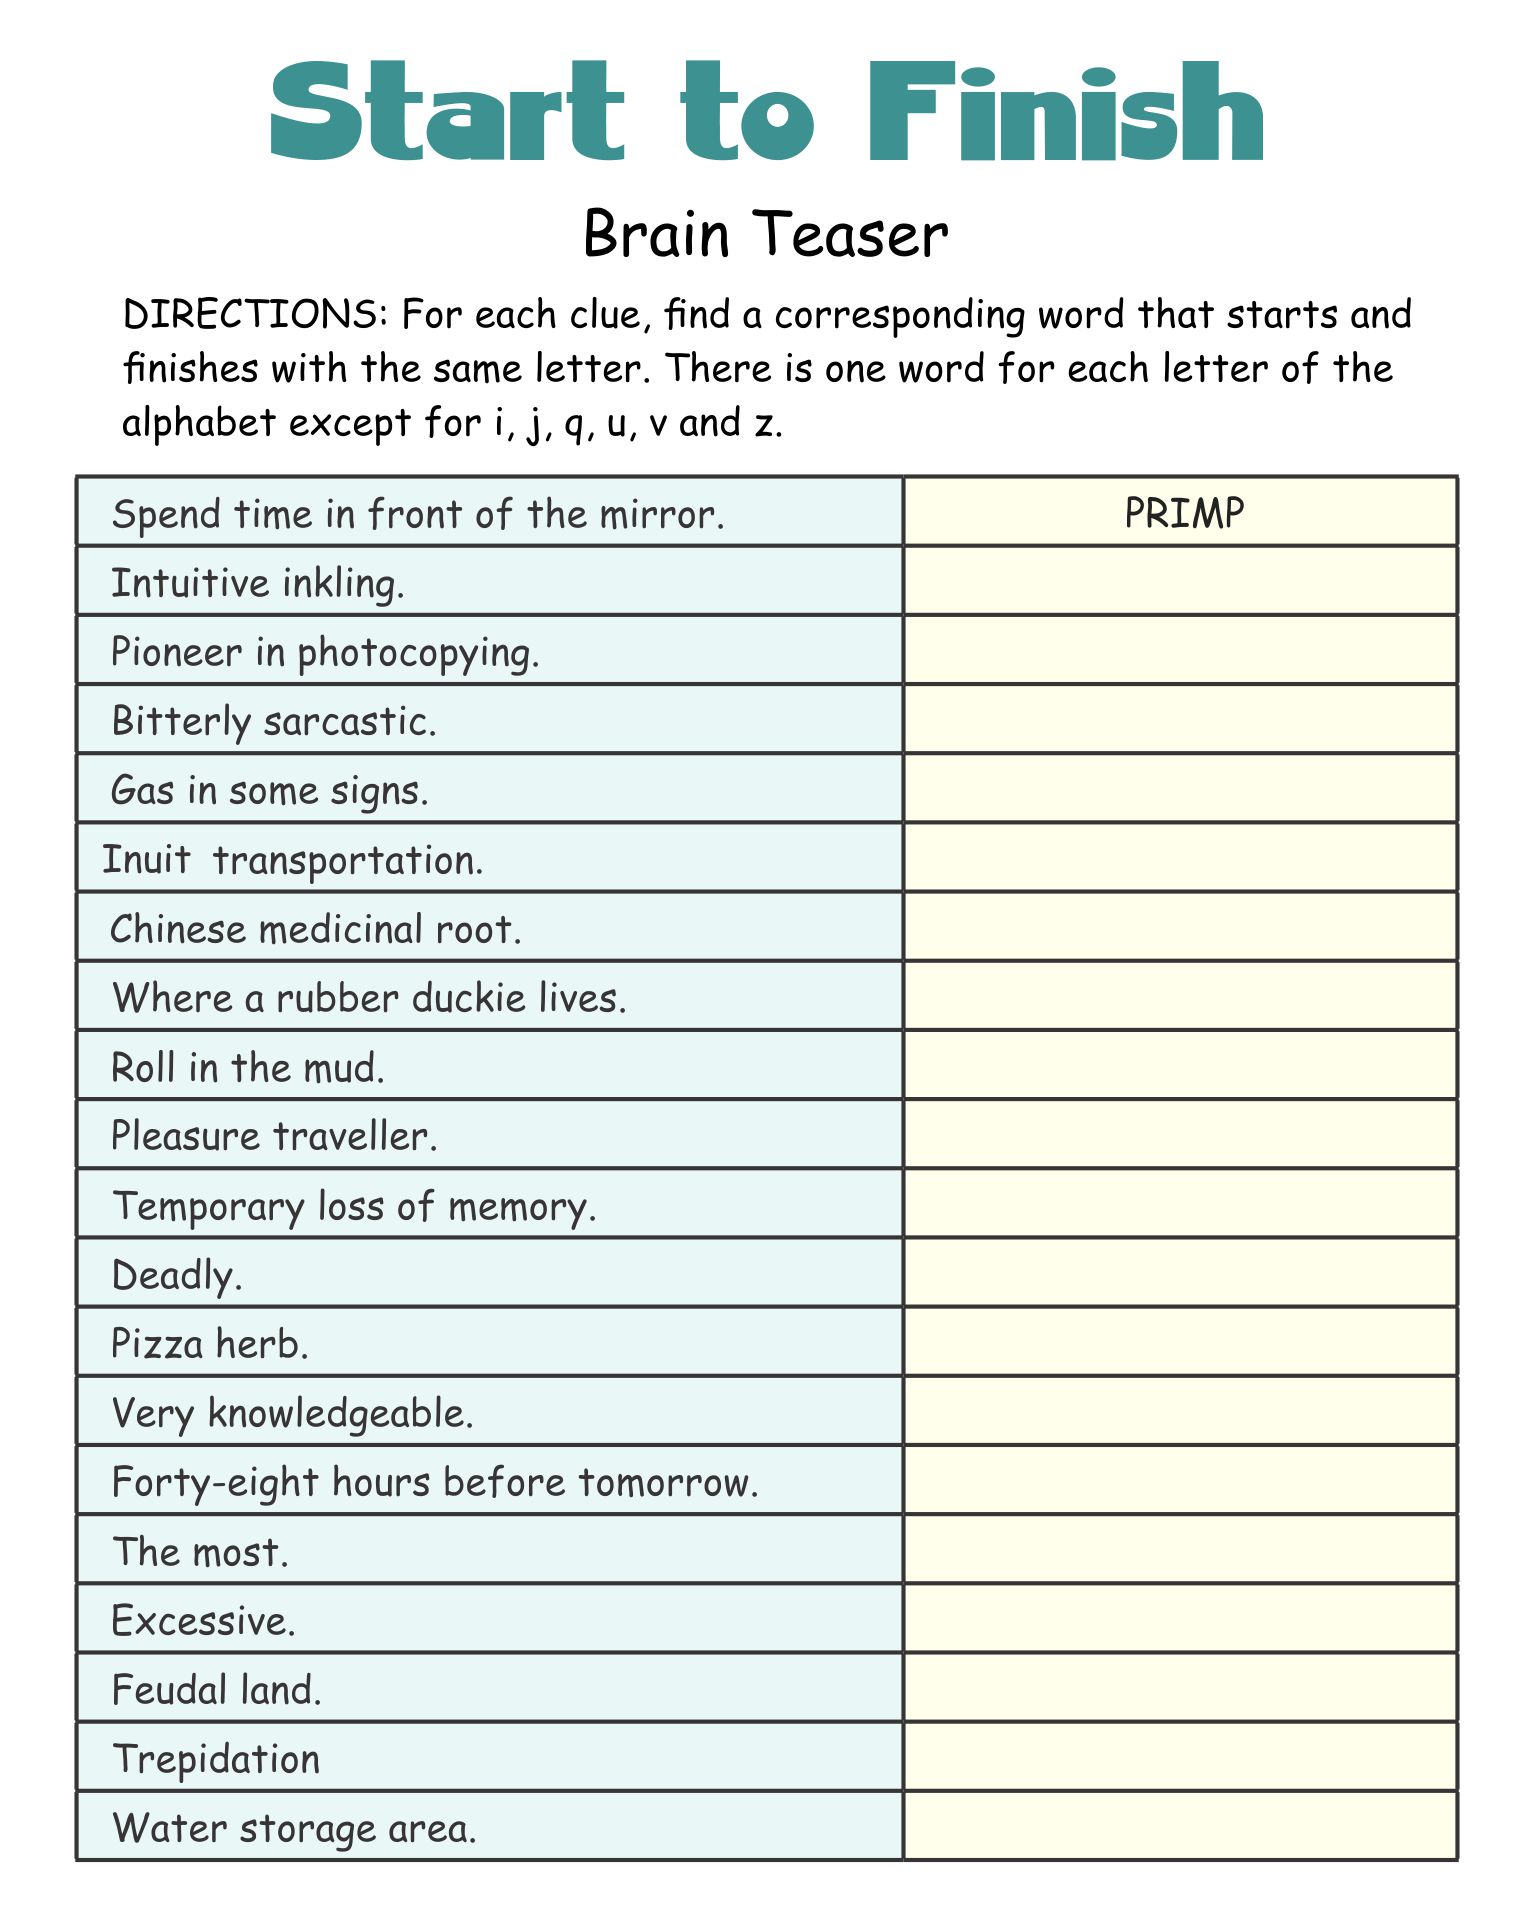 Adult Brain Teaser 97